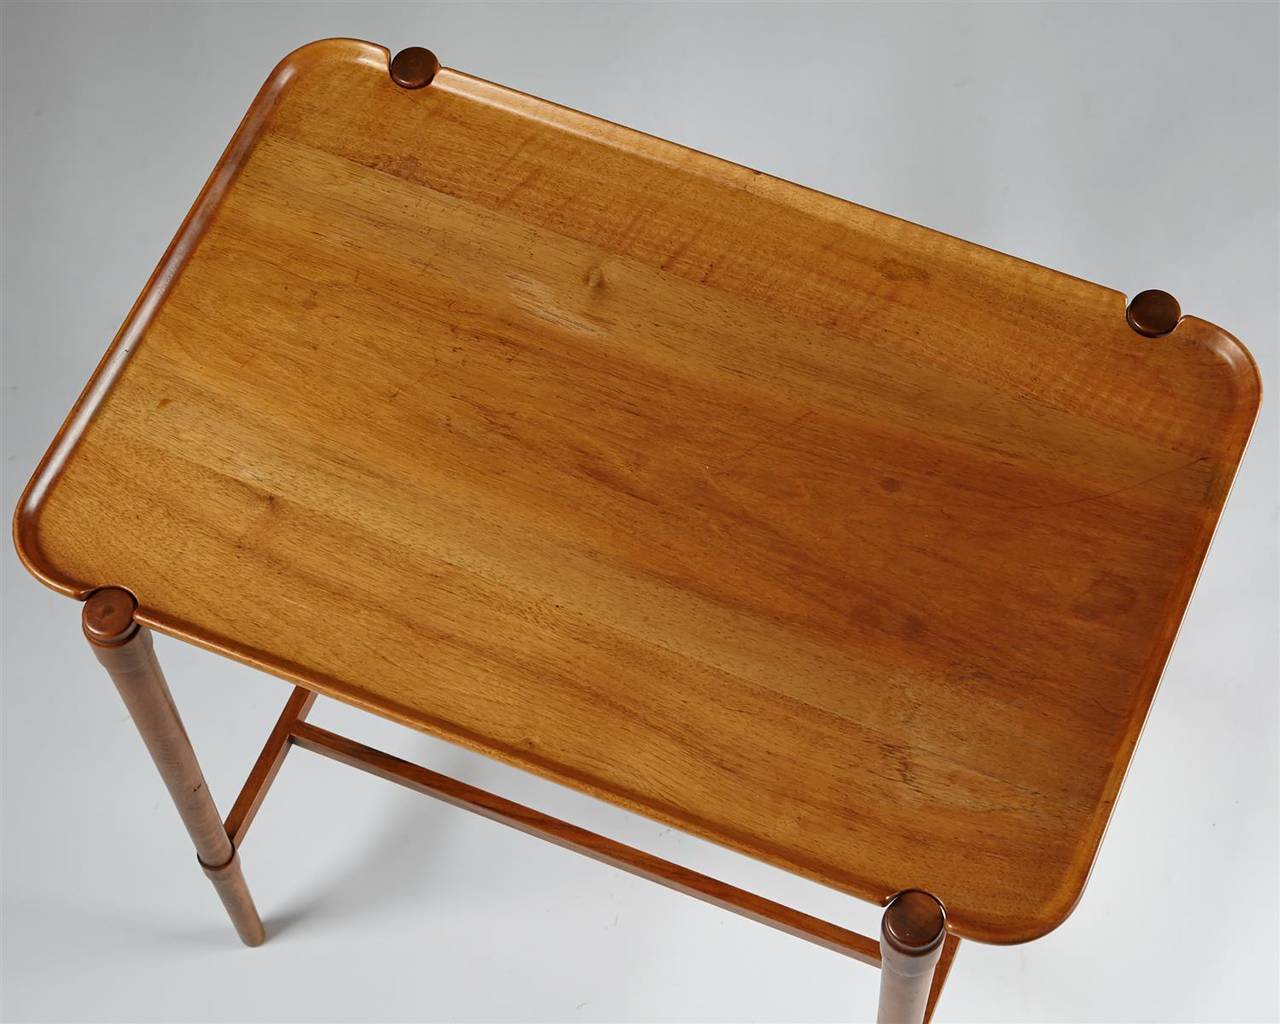 Occasional table designed by Peder Hvidt for Fritz Hansen, Denmark, 1943.
Solid walnut. Model no 1775.
Very rare model.